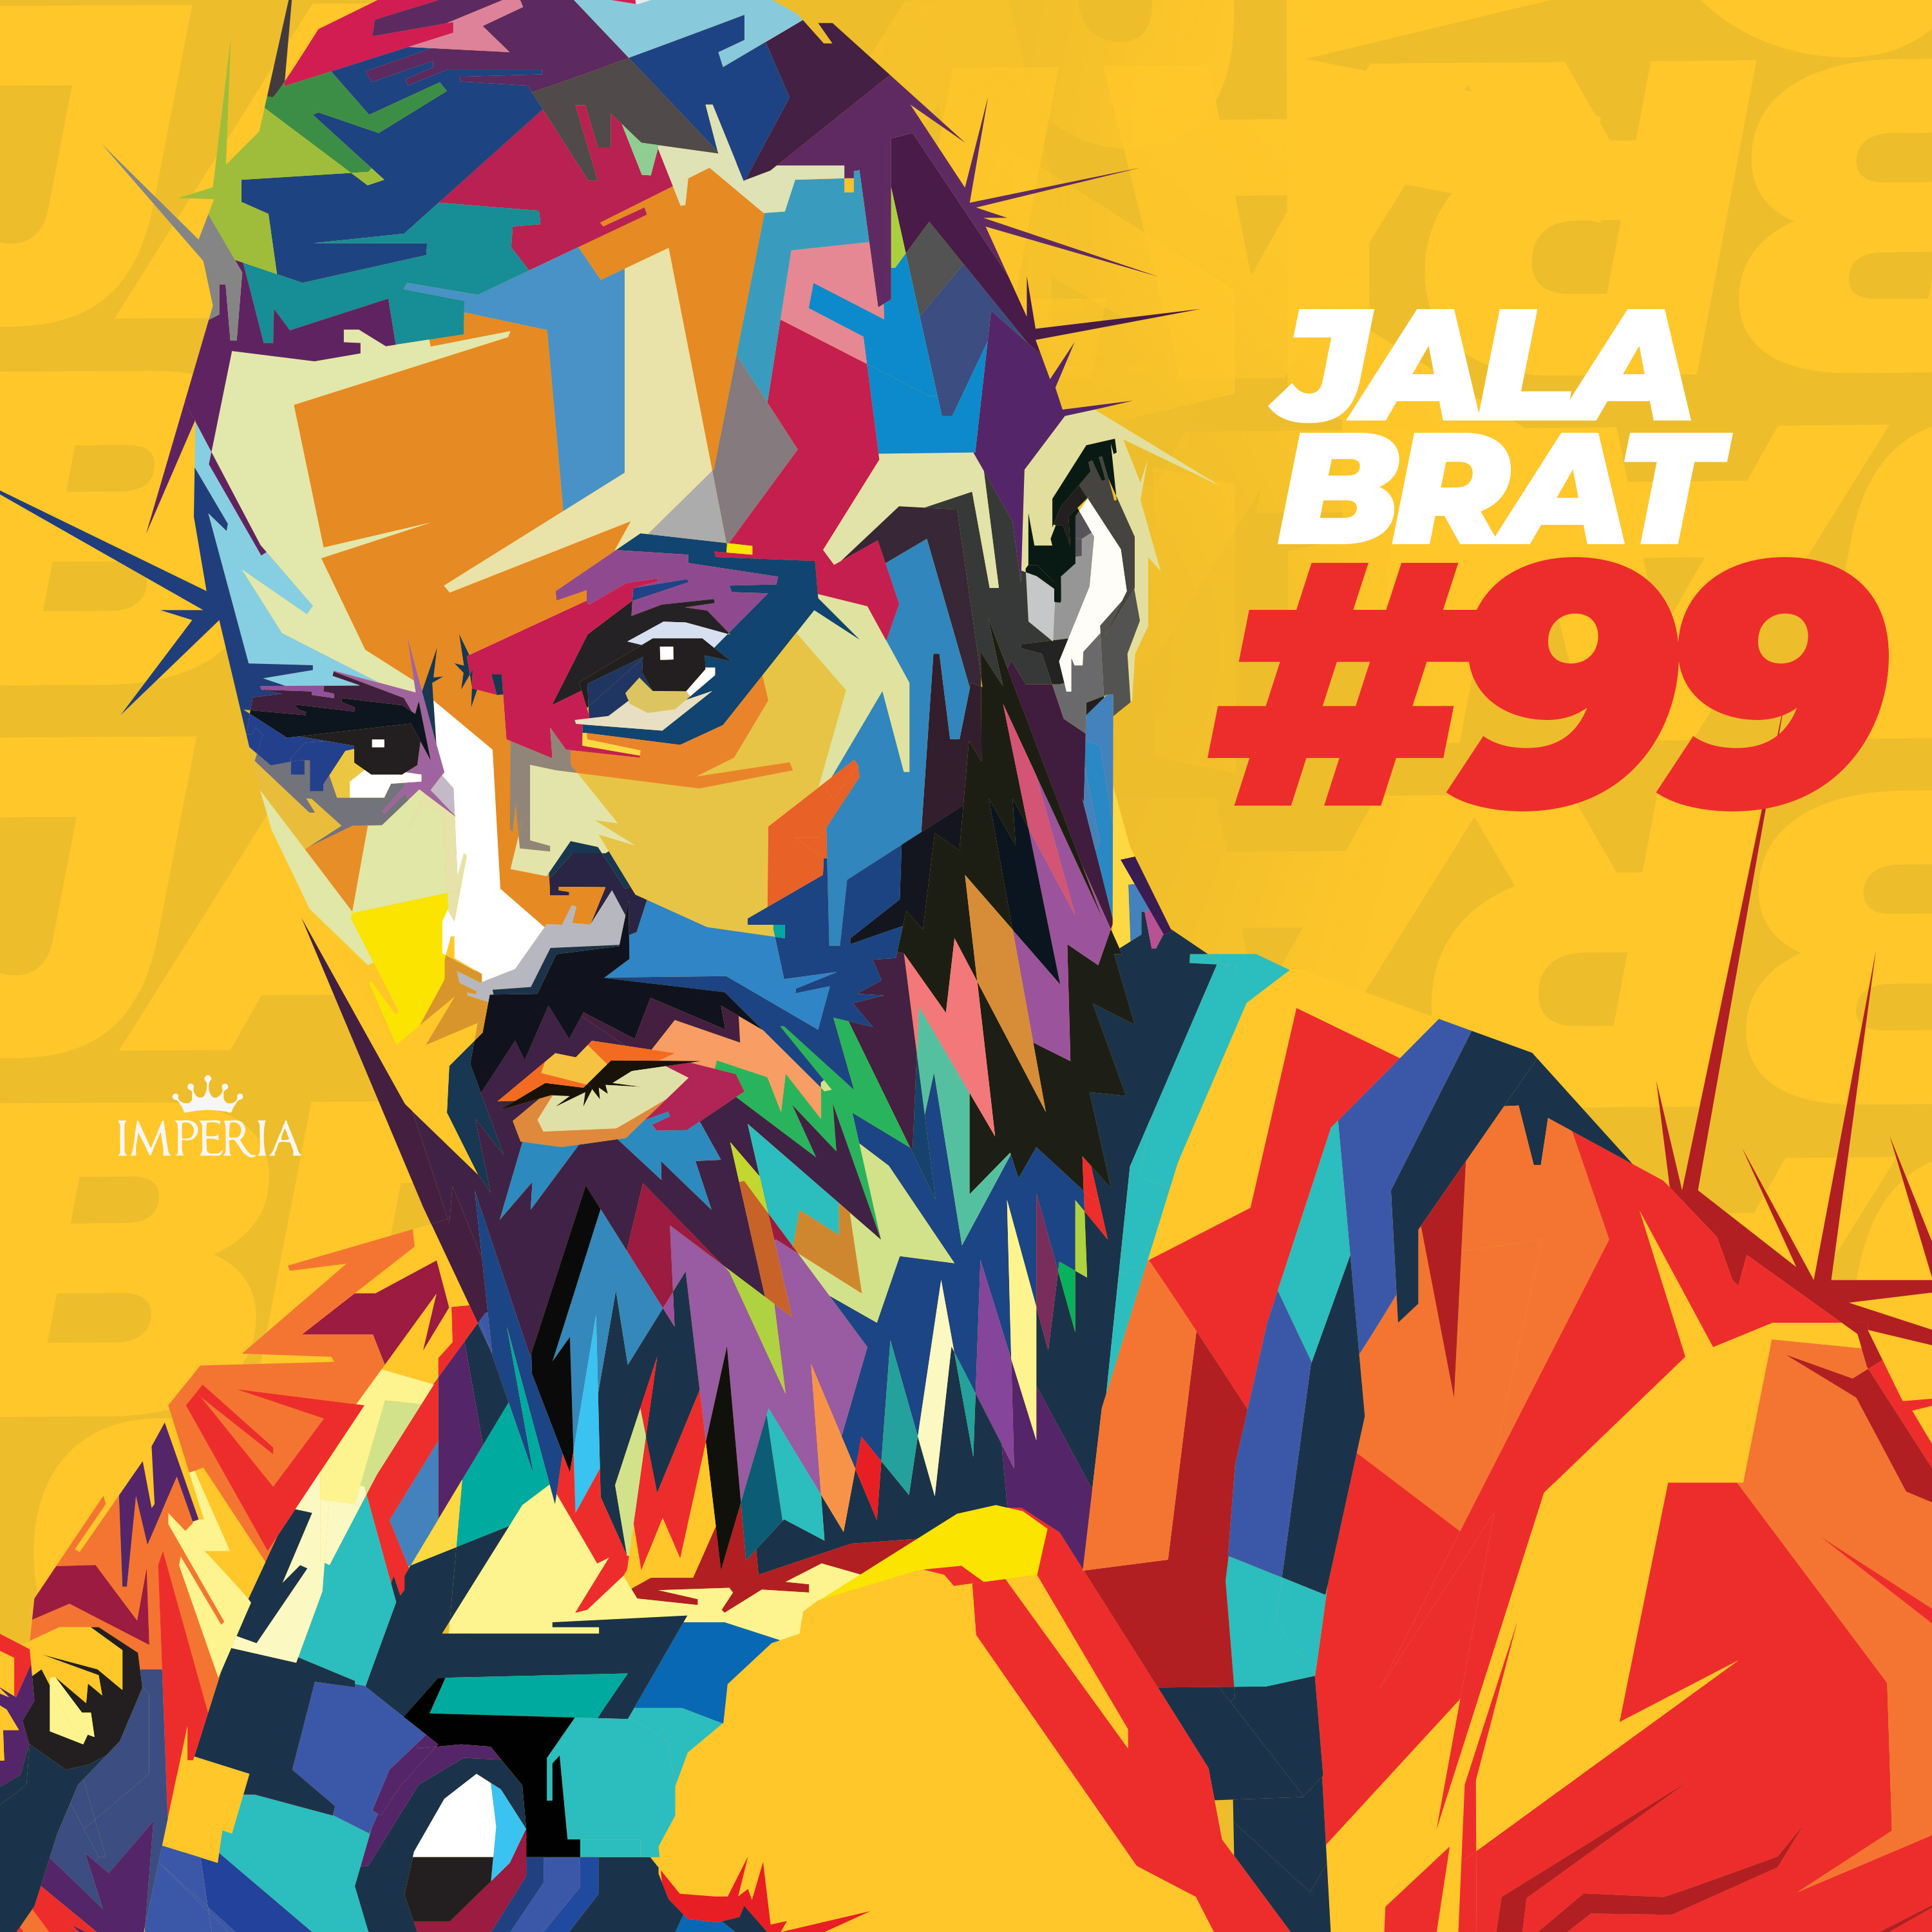 Jala Brat - #99 - Listen on Spotify, Deezer, YouTube, Google Play Music and Buy on Amazon, iTunes Google Play | EMDC Network